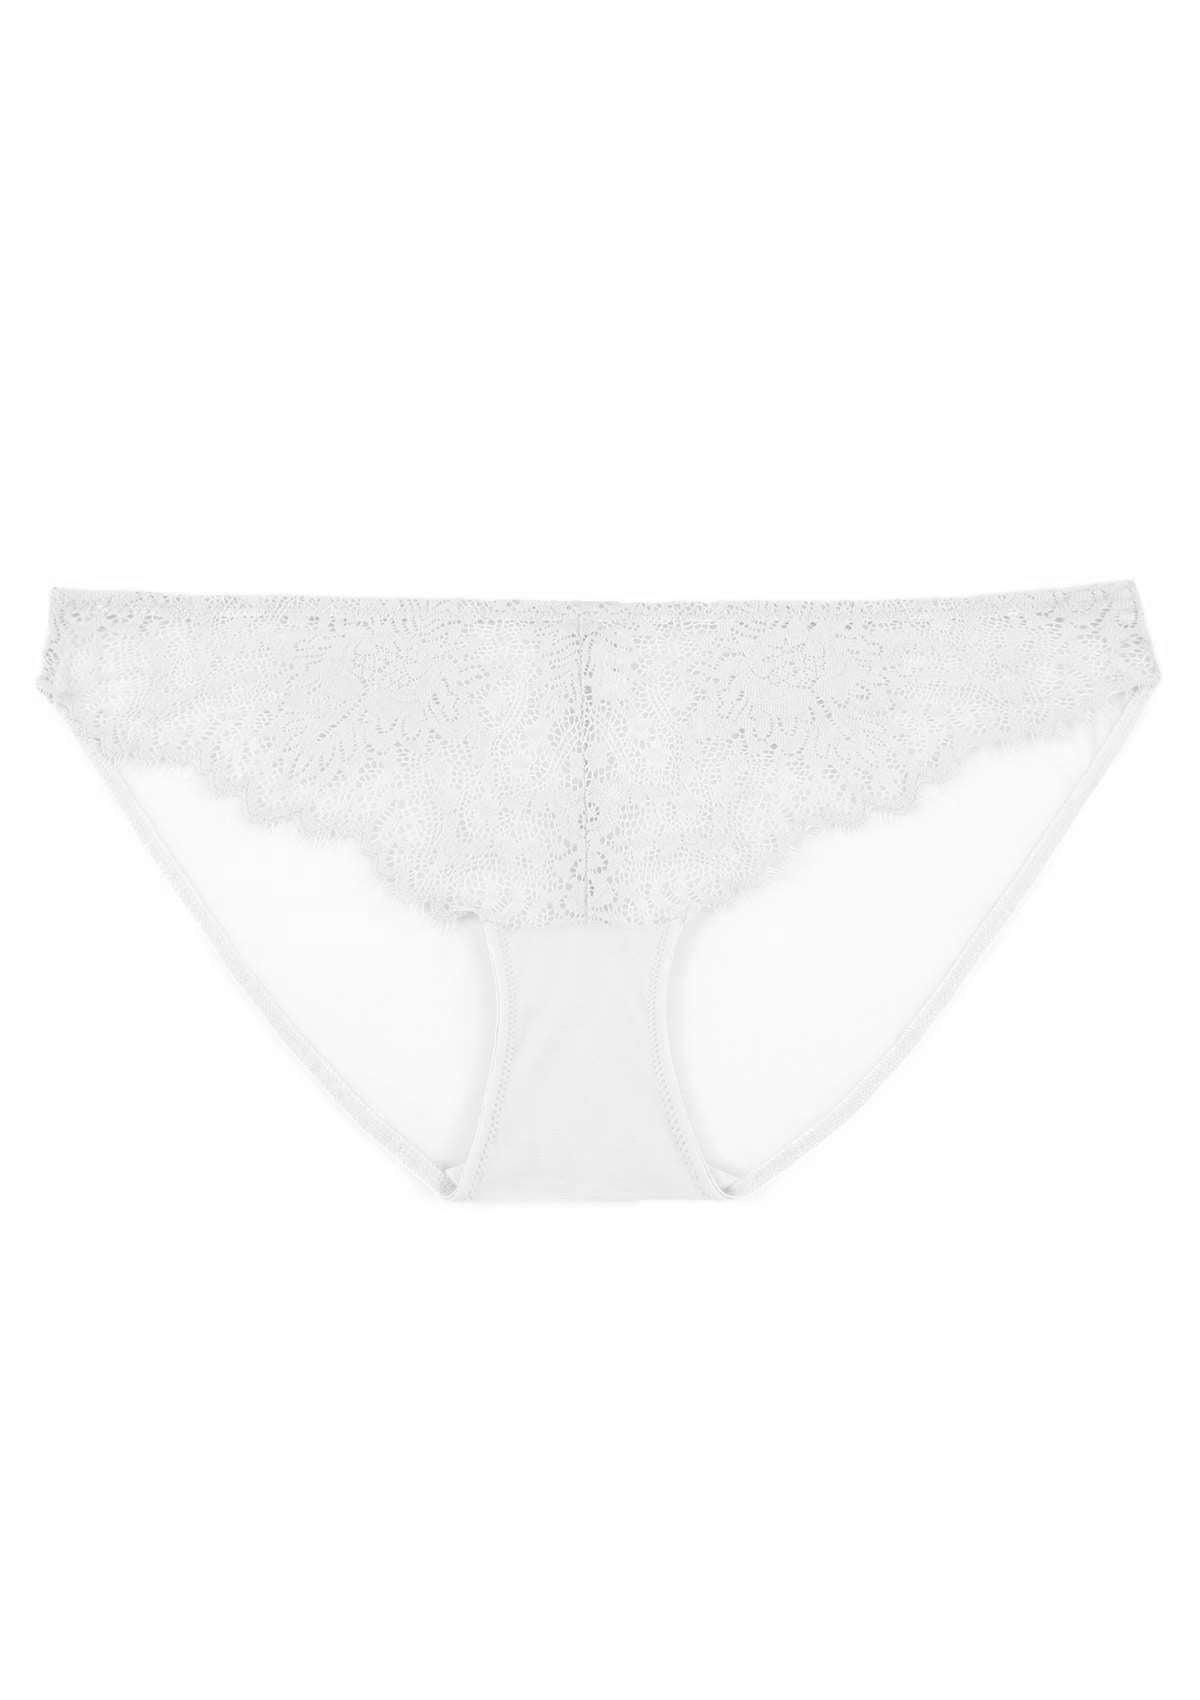 HSIA Sunflower Exquisite White Lace Bikini Underwear - XL / High-Rise Brief / White